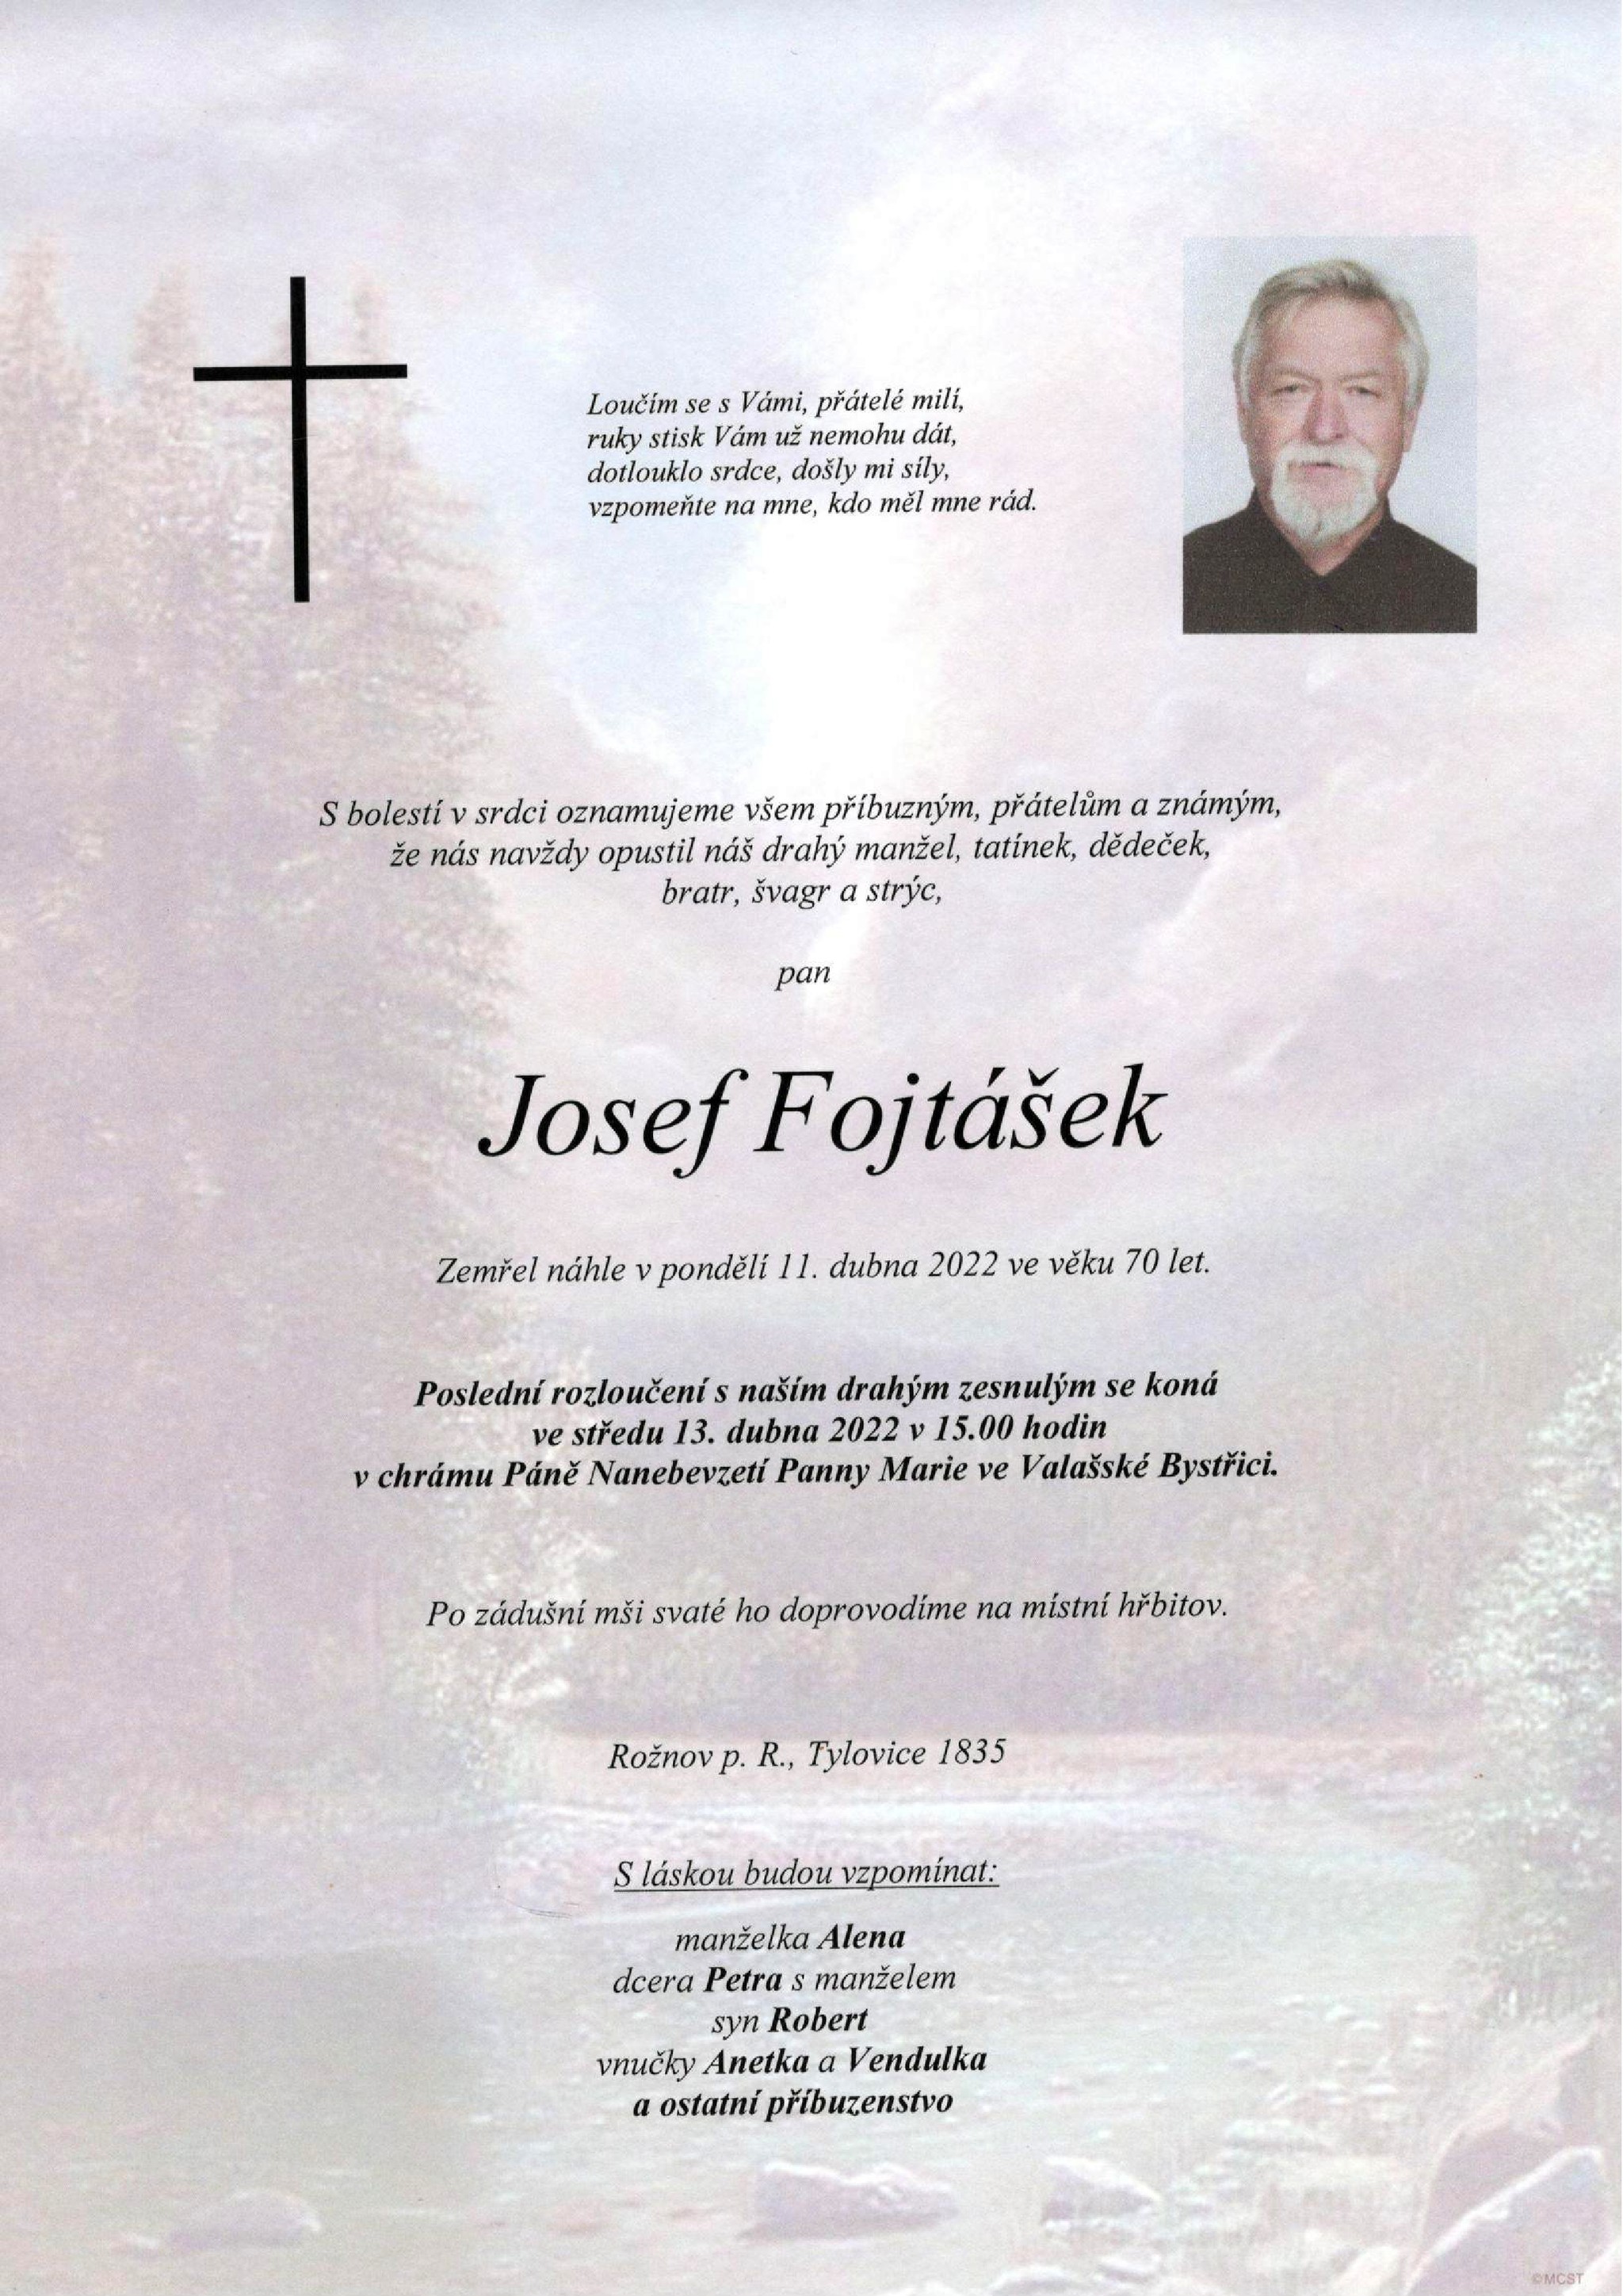 Josef Fojtášek